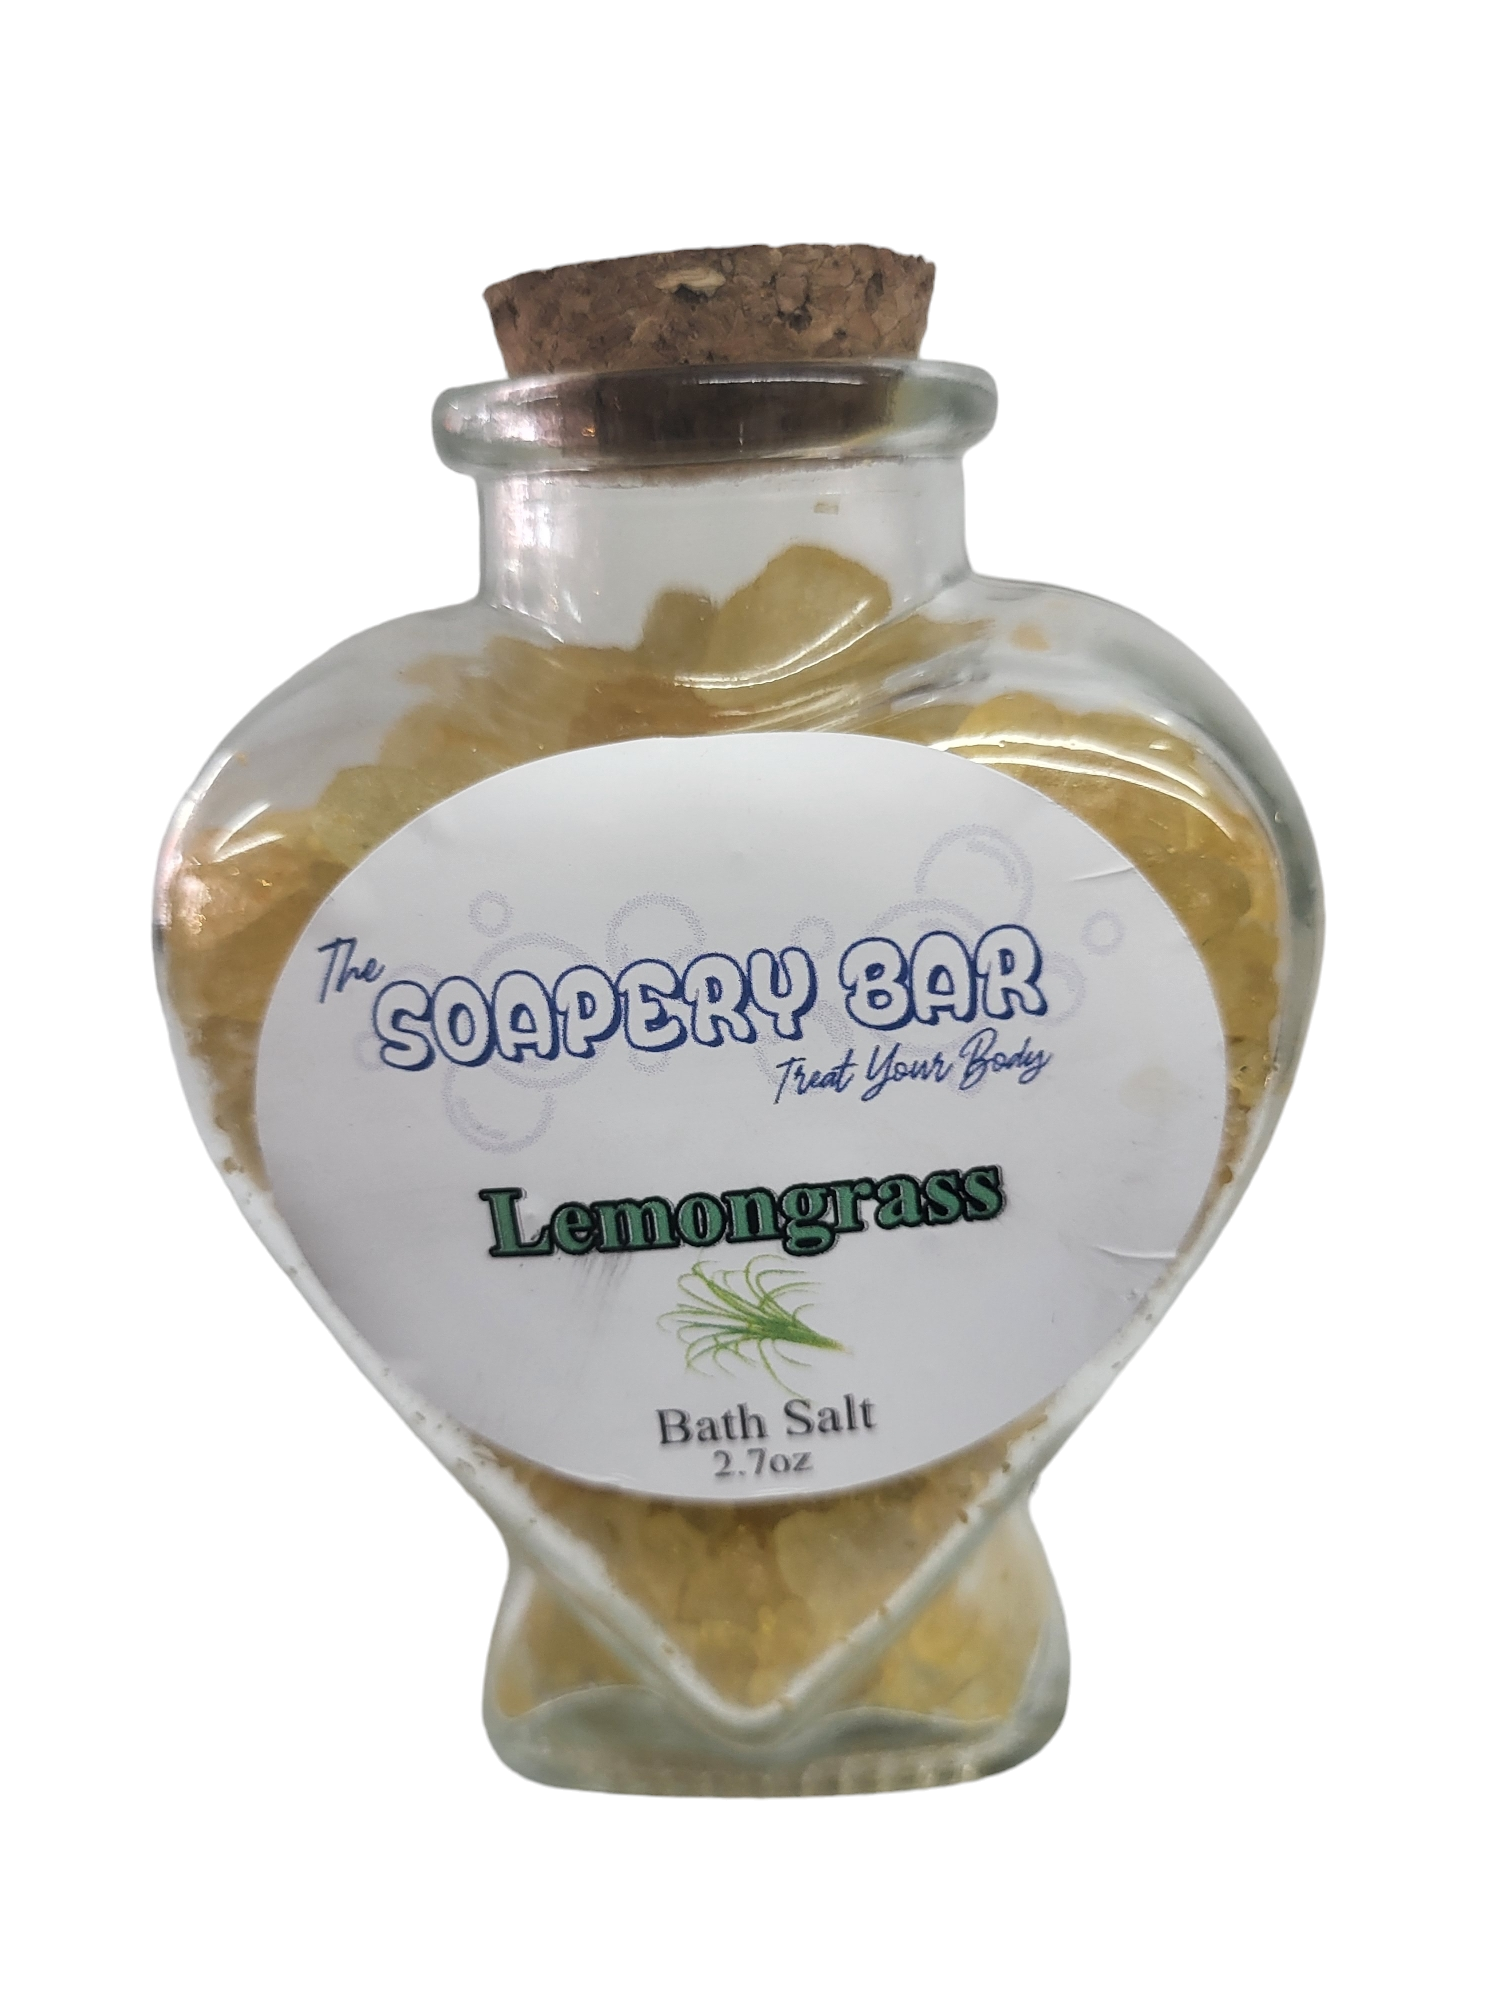 Lemongrass Bath Salt – The Soapery Bar